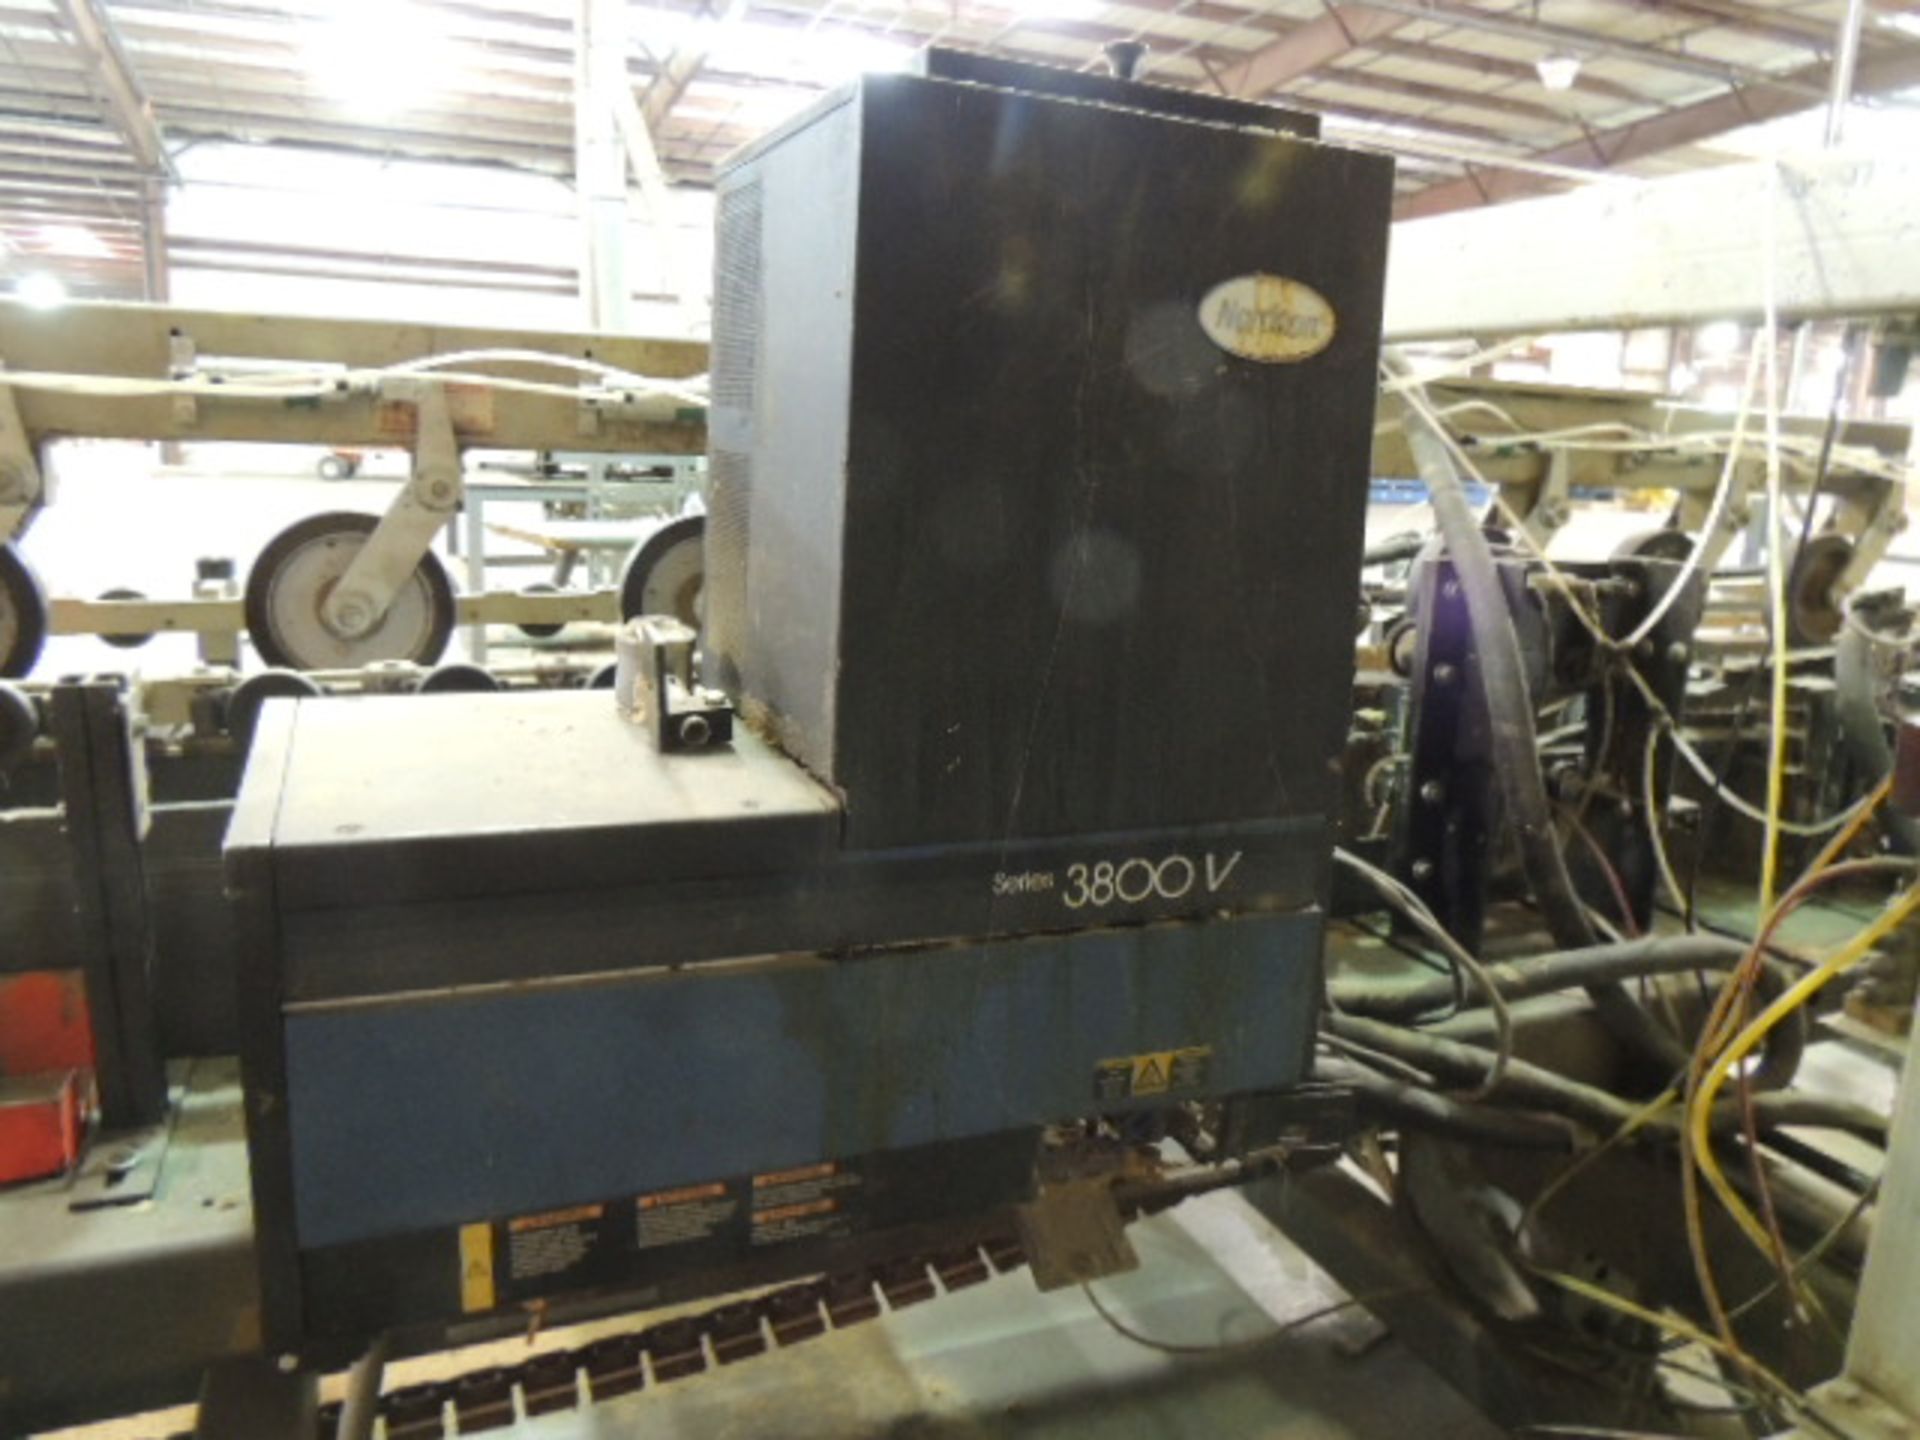 Midwest Automation CF 1520 Control panel, Core Fab, no stick guides Nordson 3800V hot melt unit, - Image 6 of 9